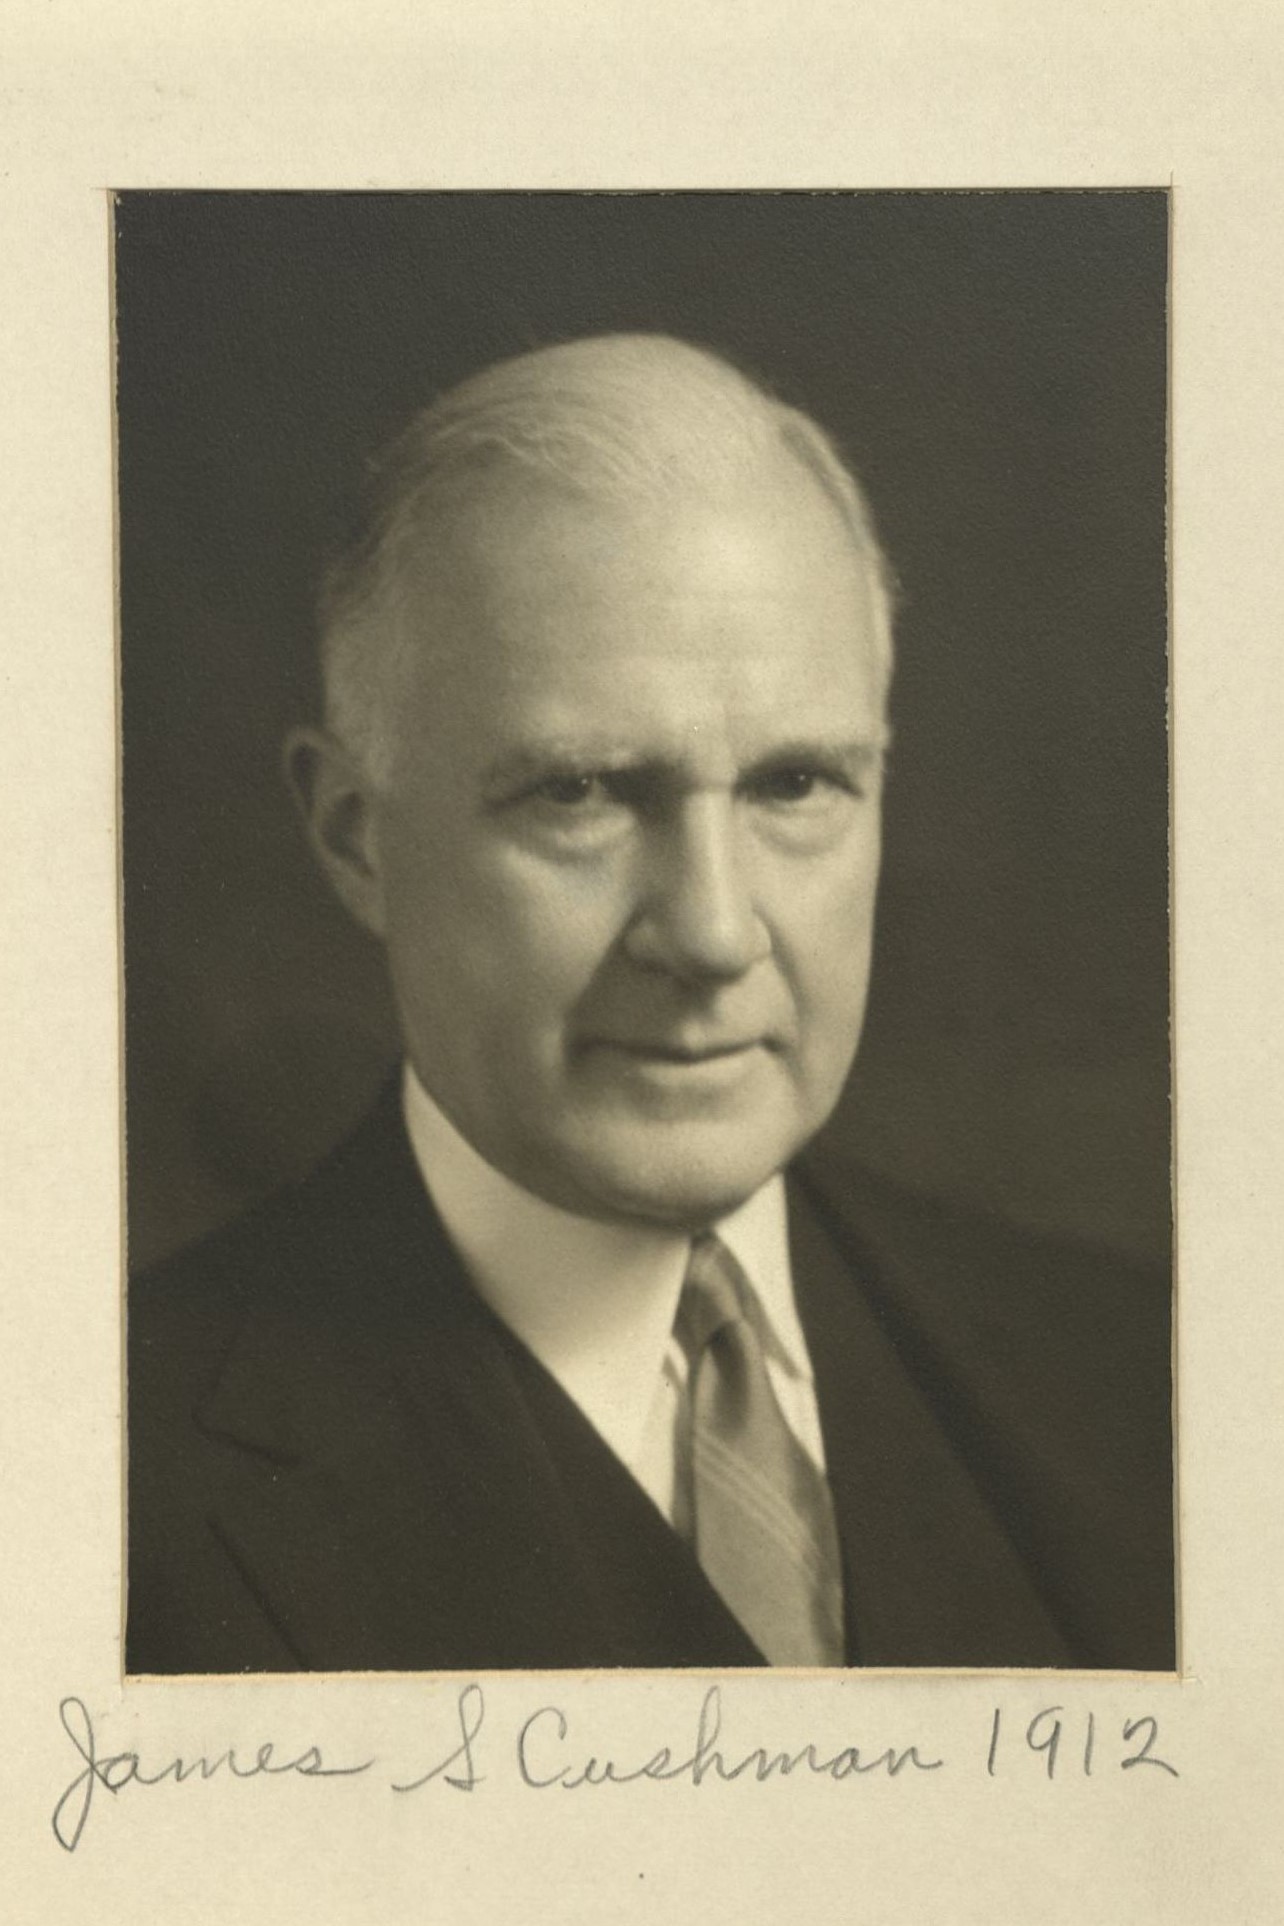 Member portrait of James Stewart Cushman